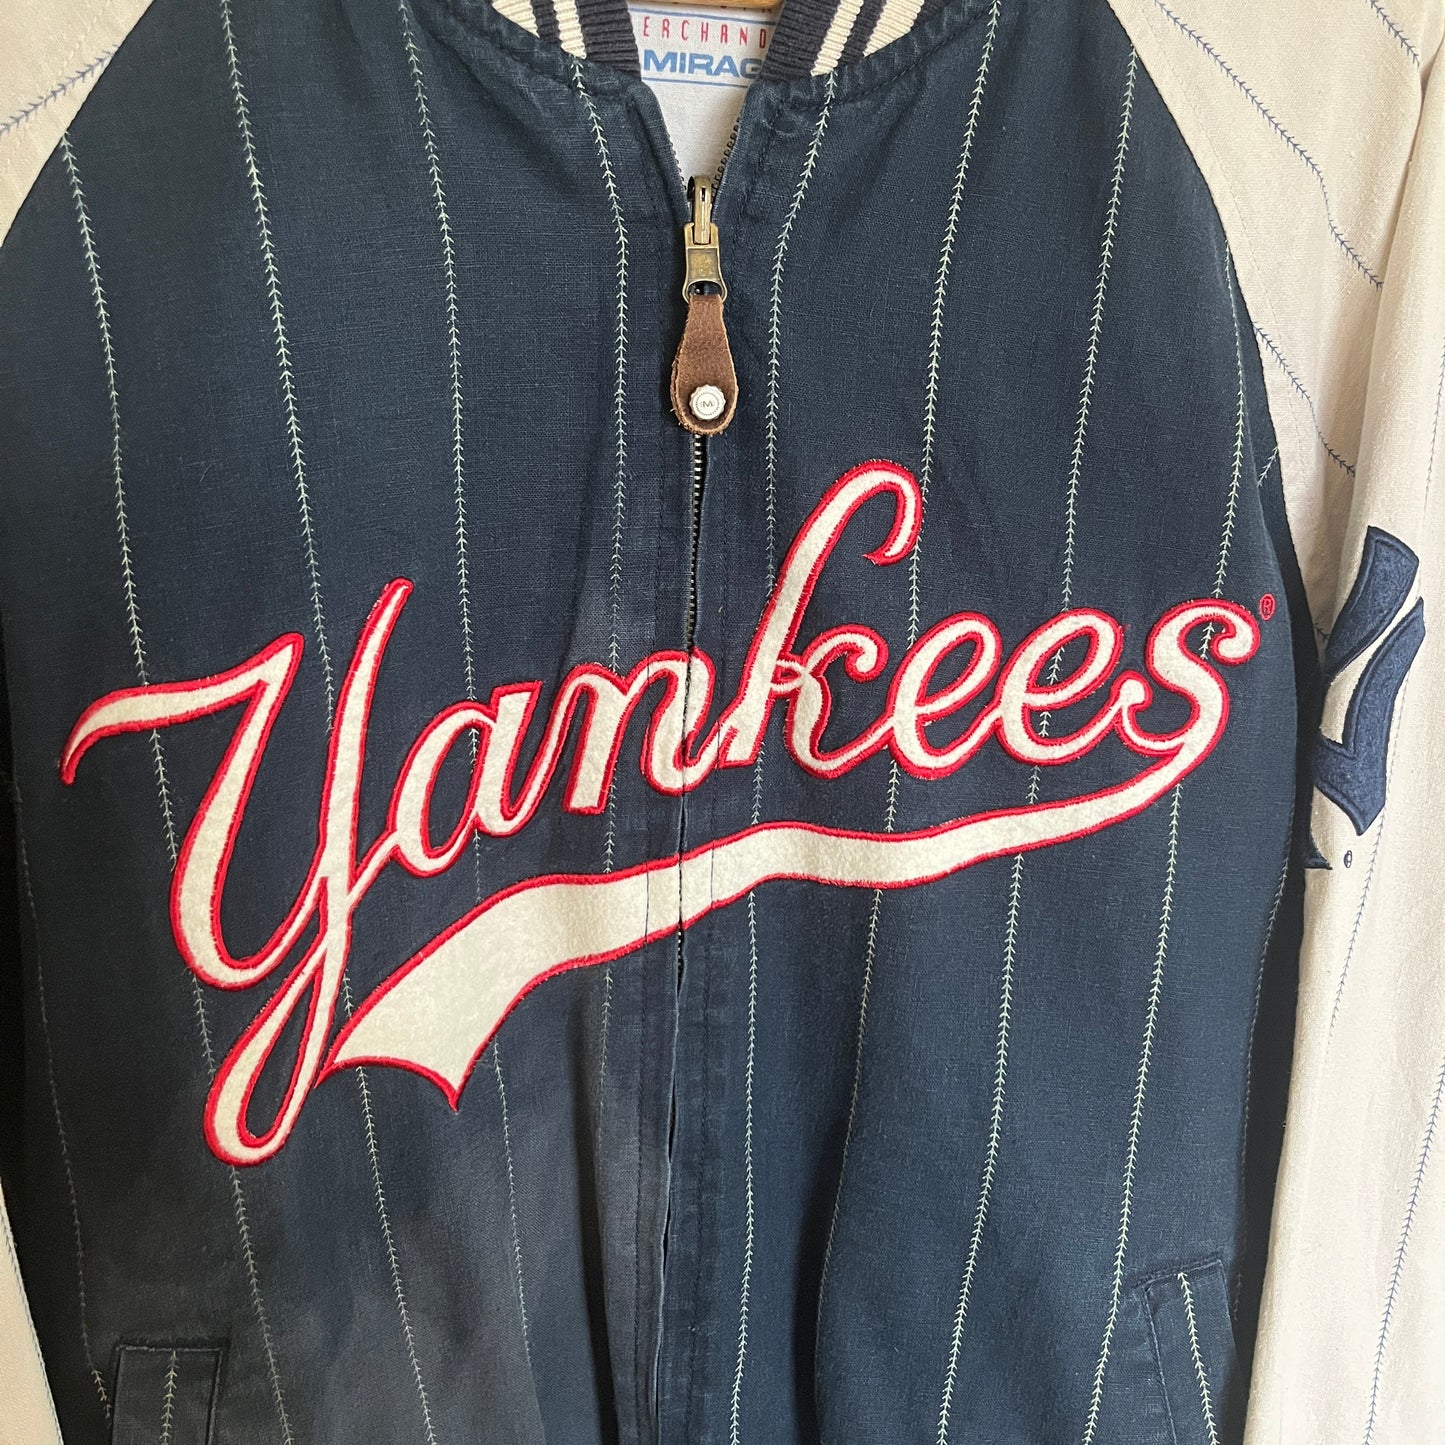 New York Yankees Mirage Jacket